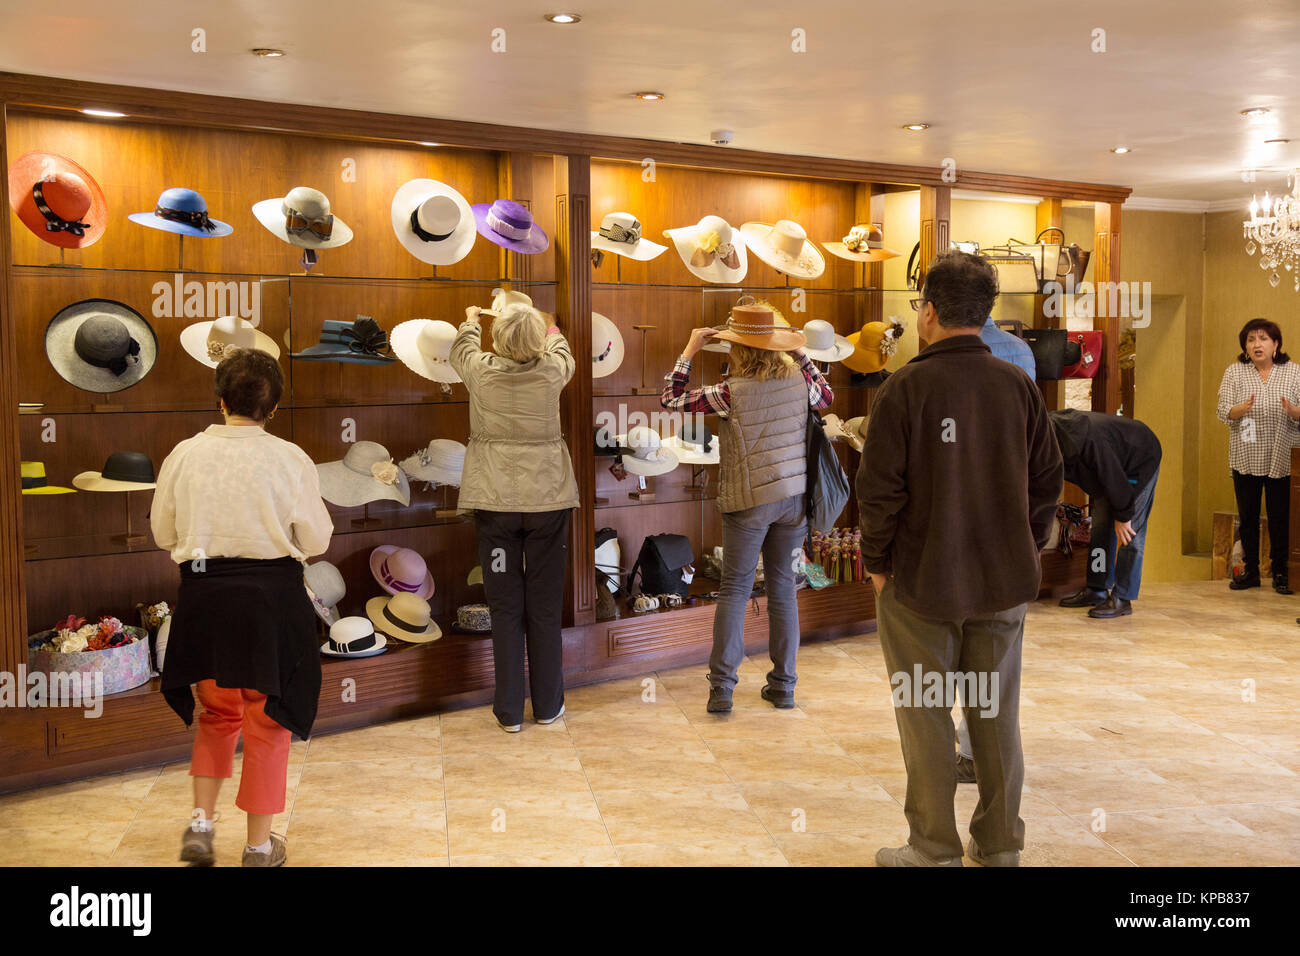 Panama Hat store - people buying panama hats, Homero Ortega factory shop, Cuenca, Ecuador South America Stock Photo